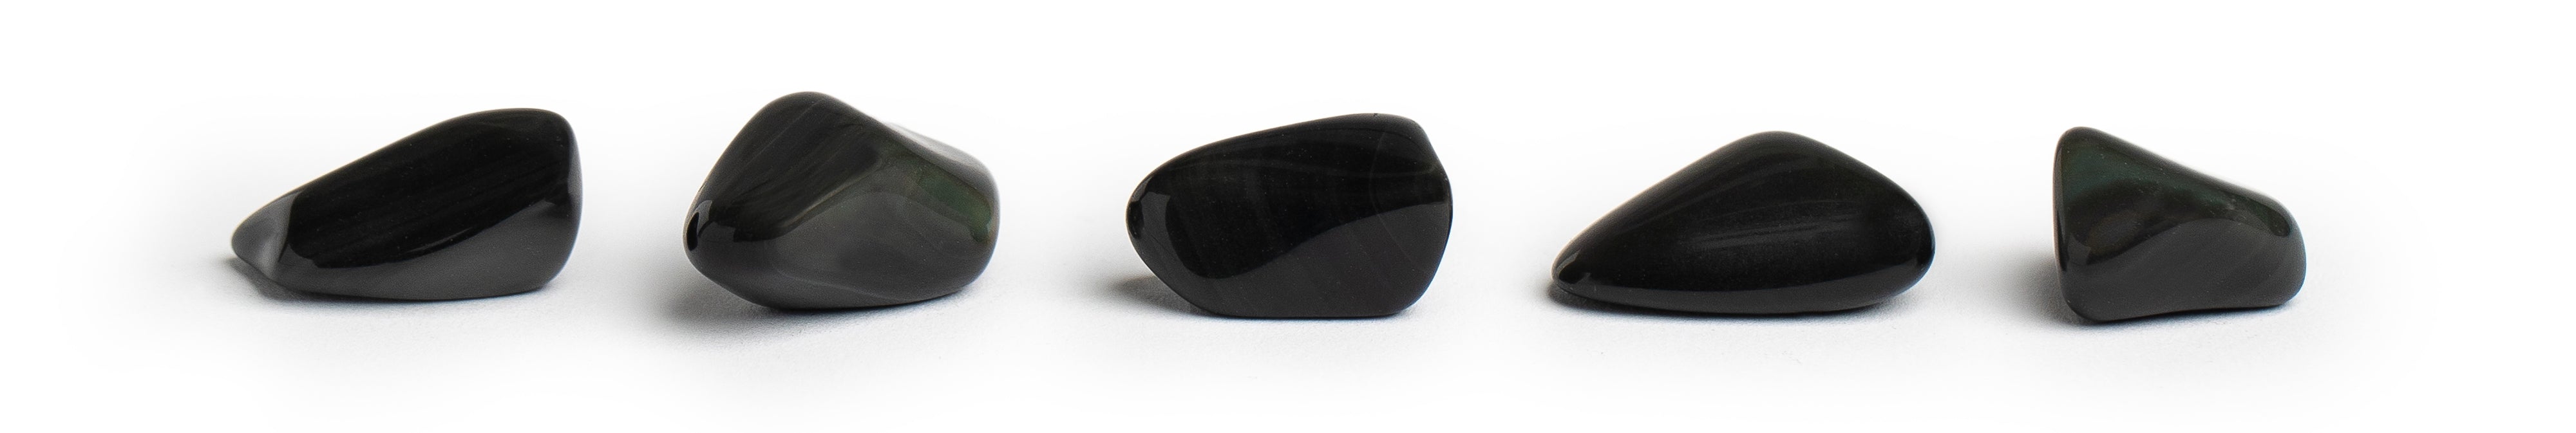 black obsidian stone - Energy Muse